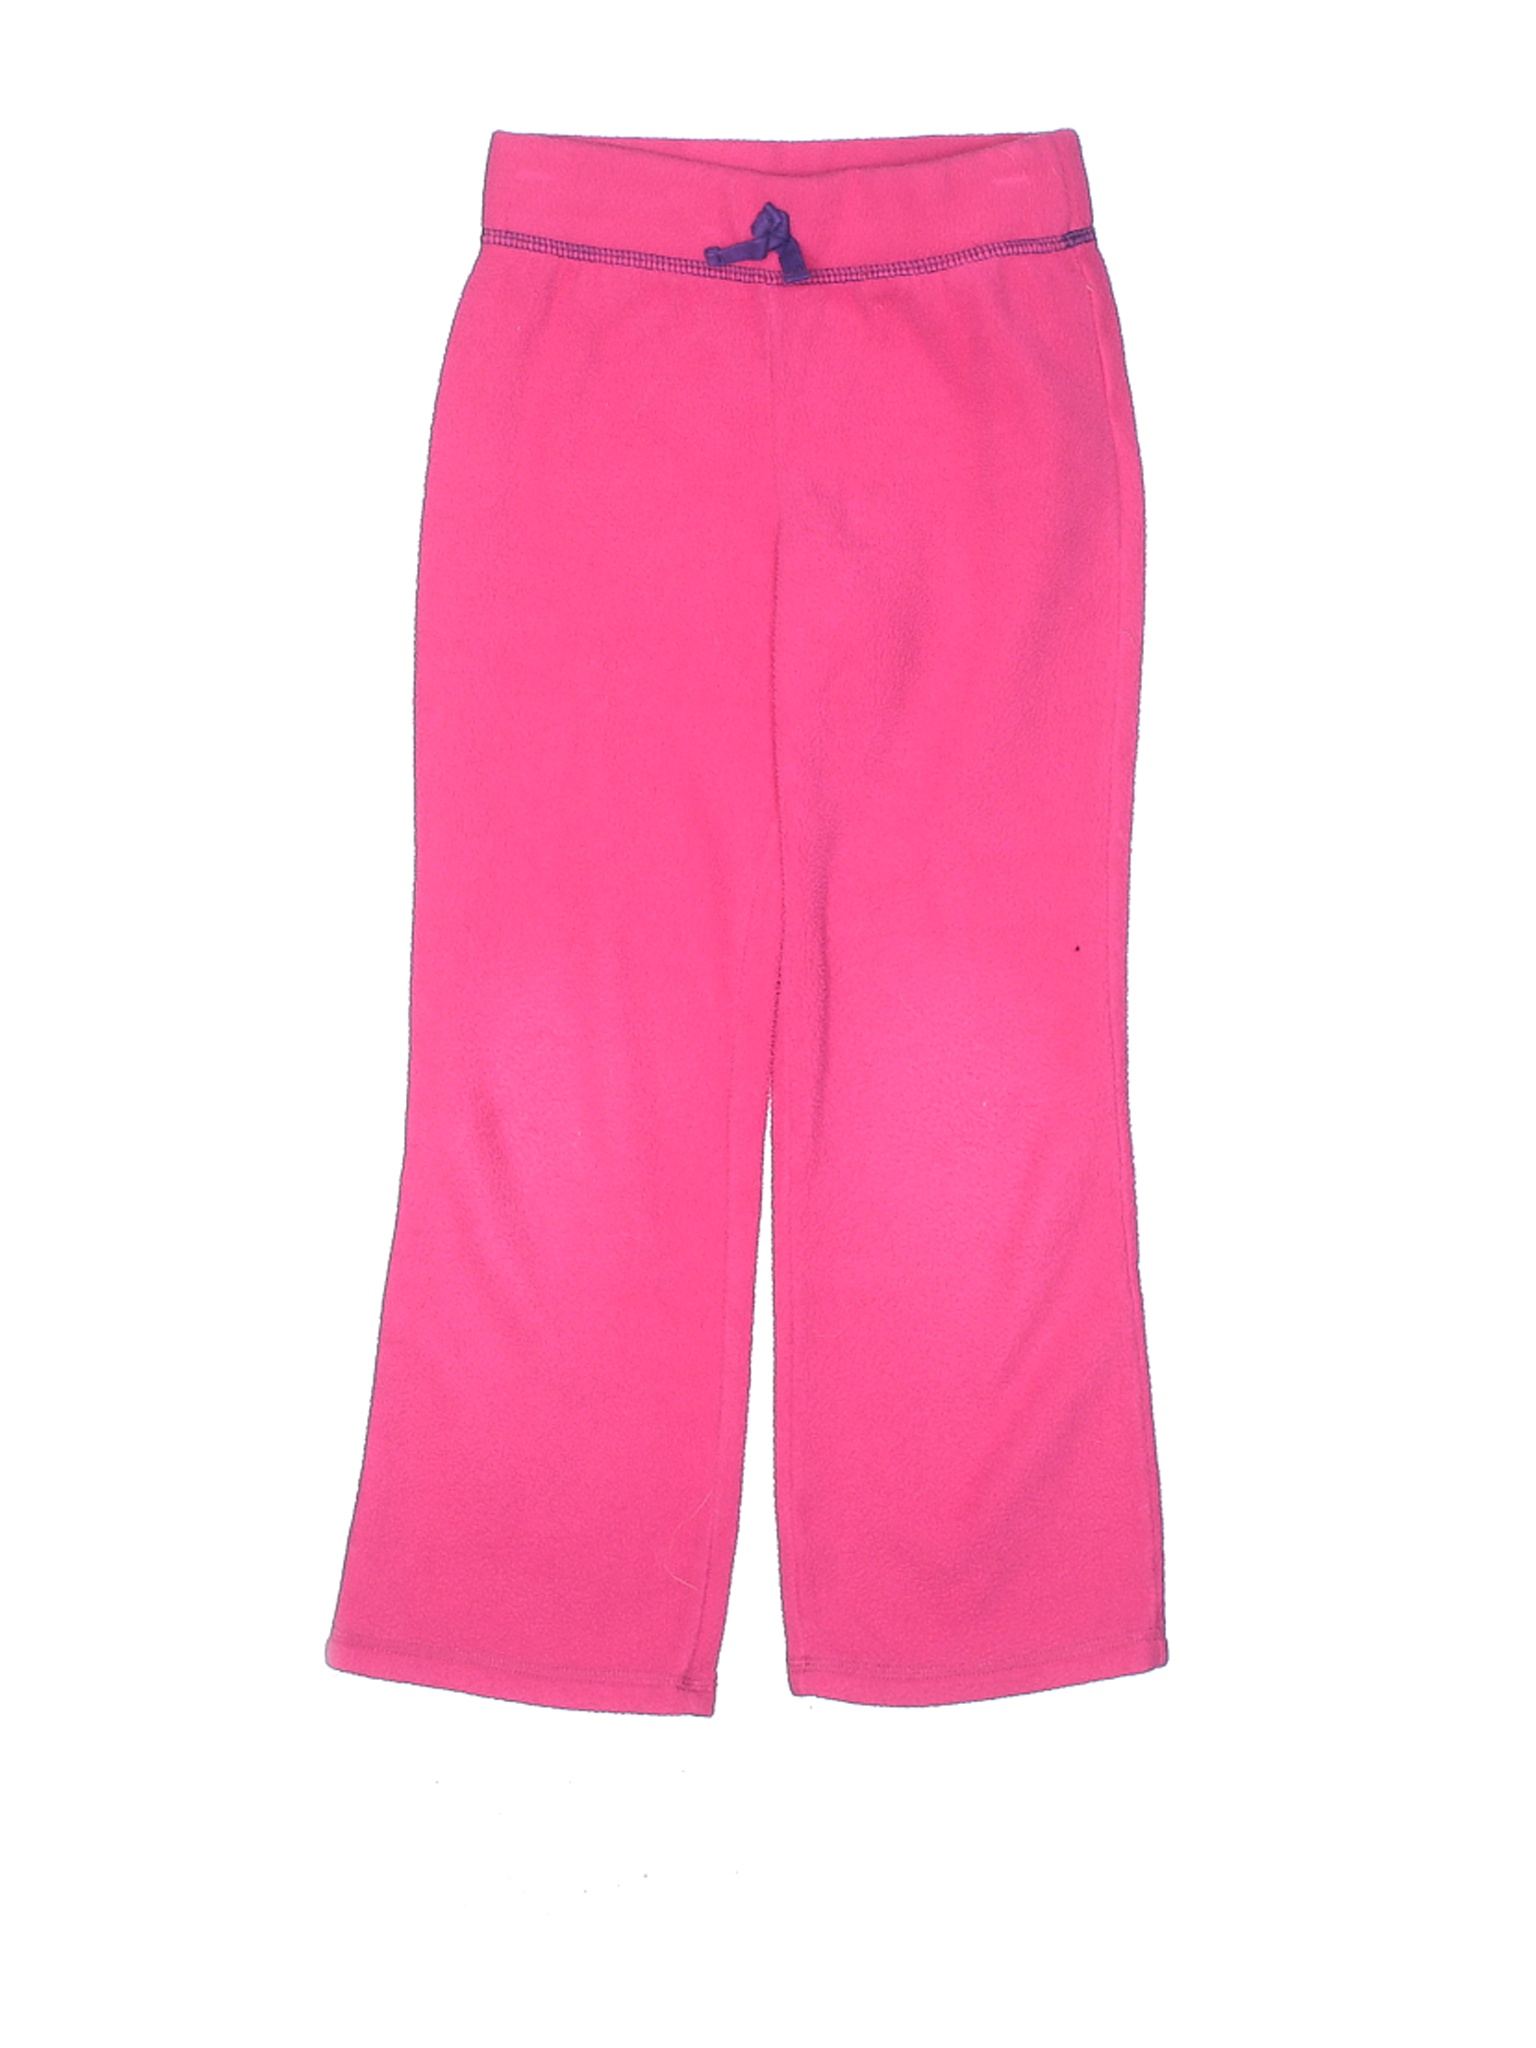 The Children's Place Girls Pink Fleece Pants Small kids | eBay